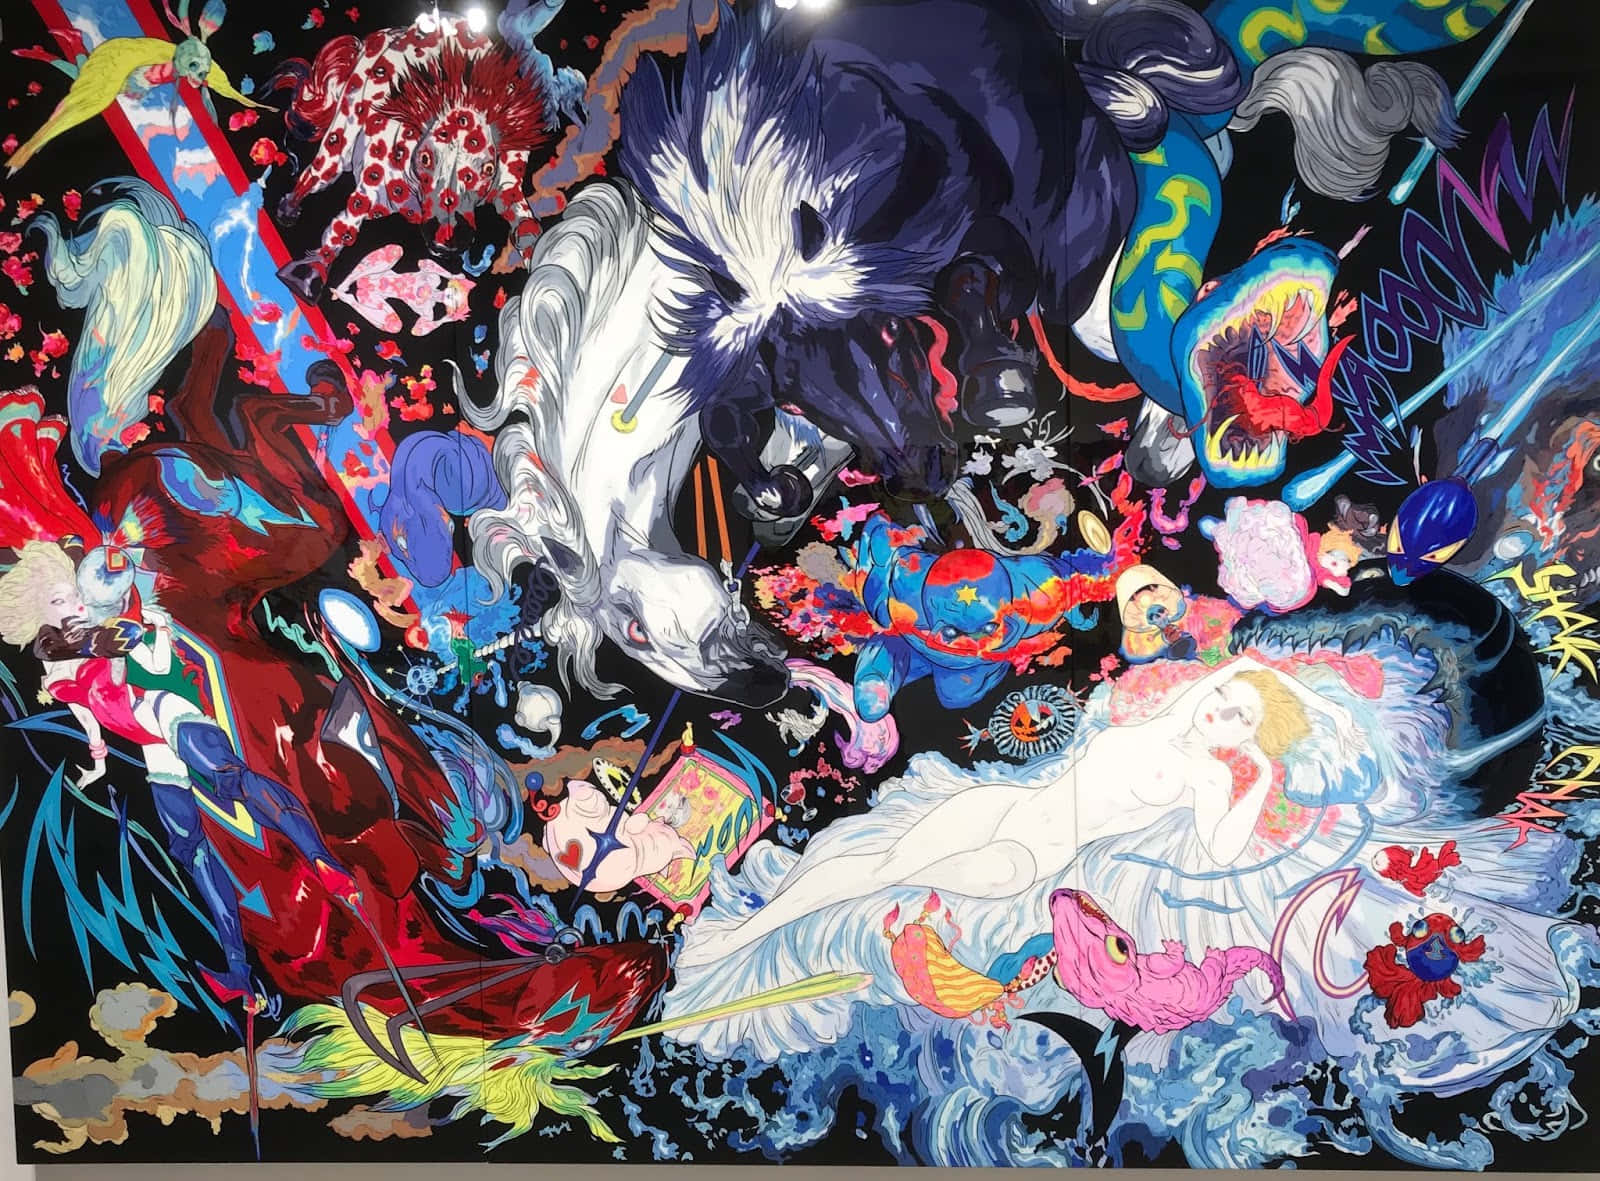 Download Vibrant Japanese Pop Art Collage Wallpaper | Wallpapers.com